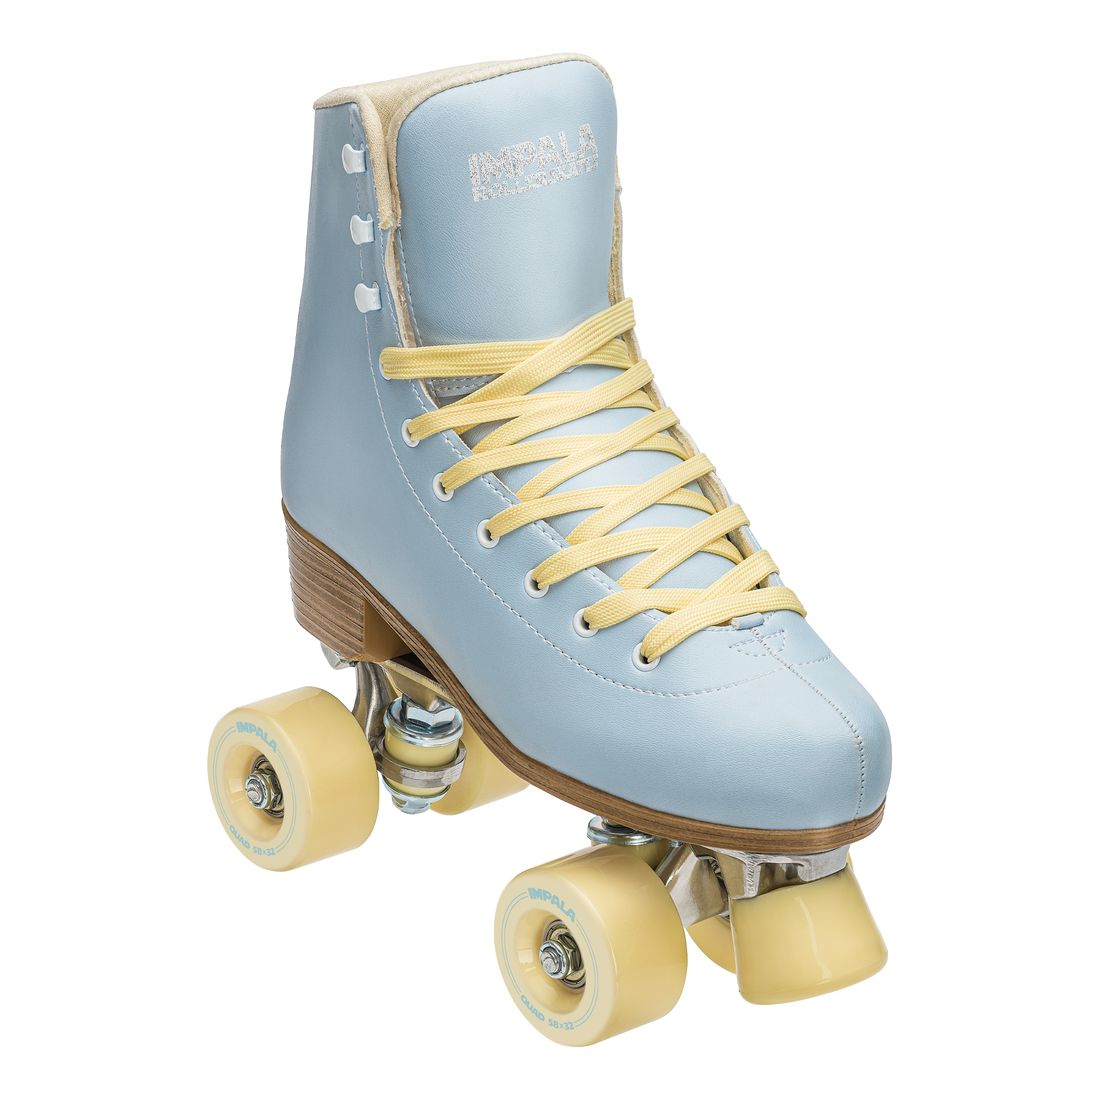 Impala Sky Blue/Yellow Quad Skates (Size 7 US)